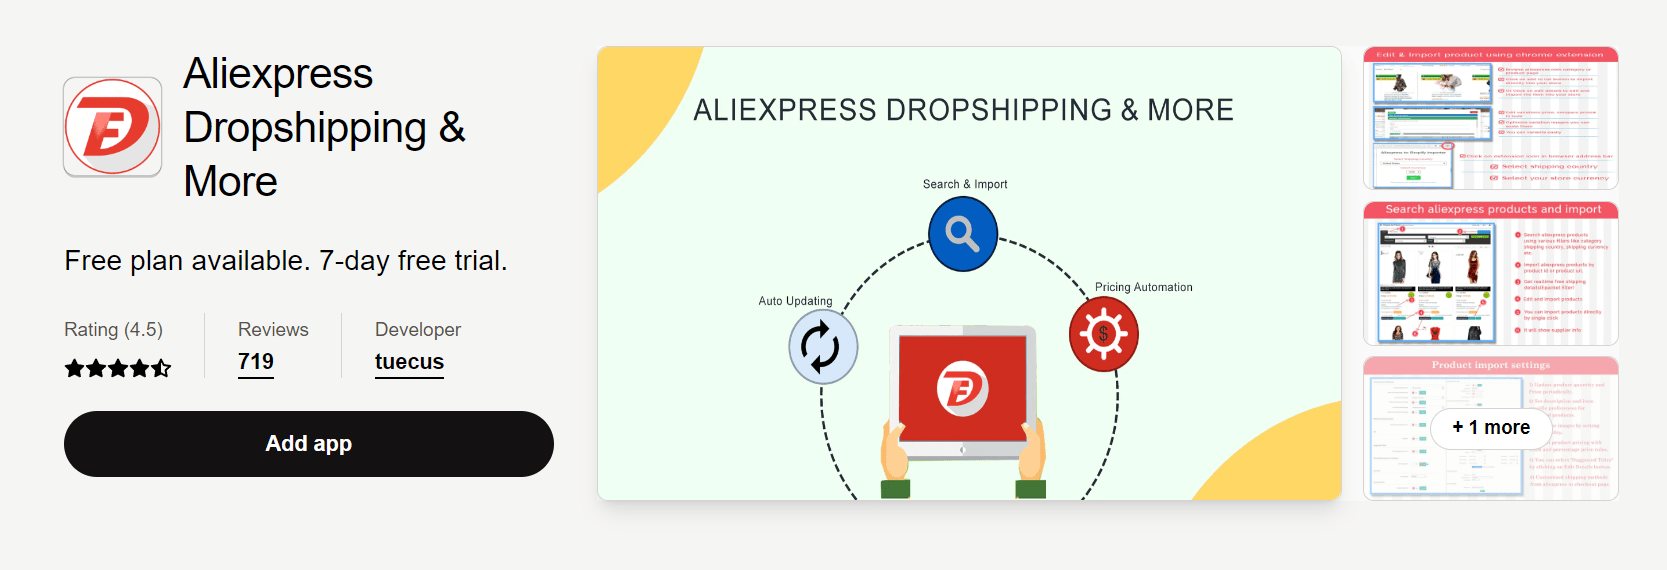 Aliexpress dropshipping app